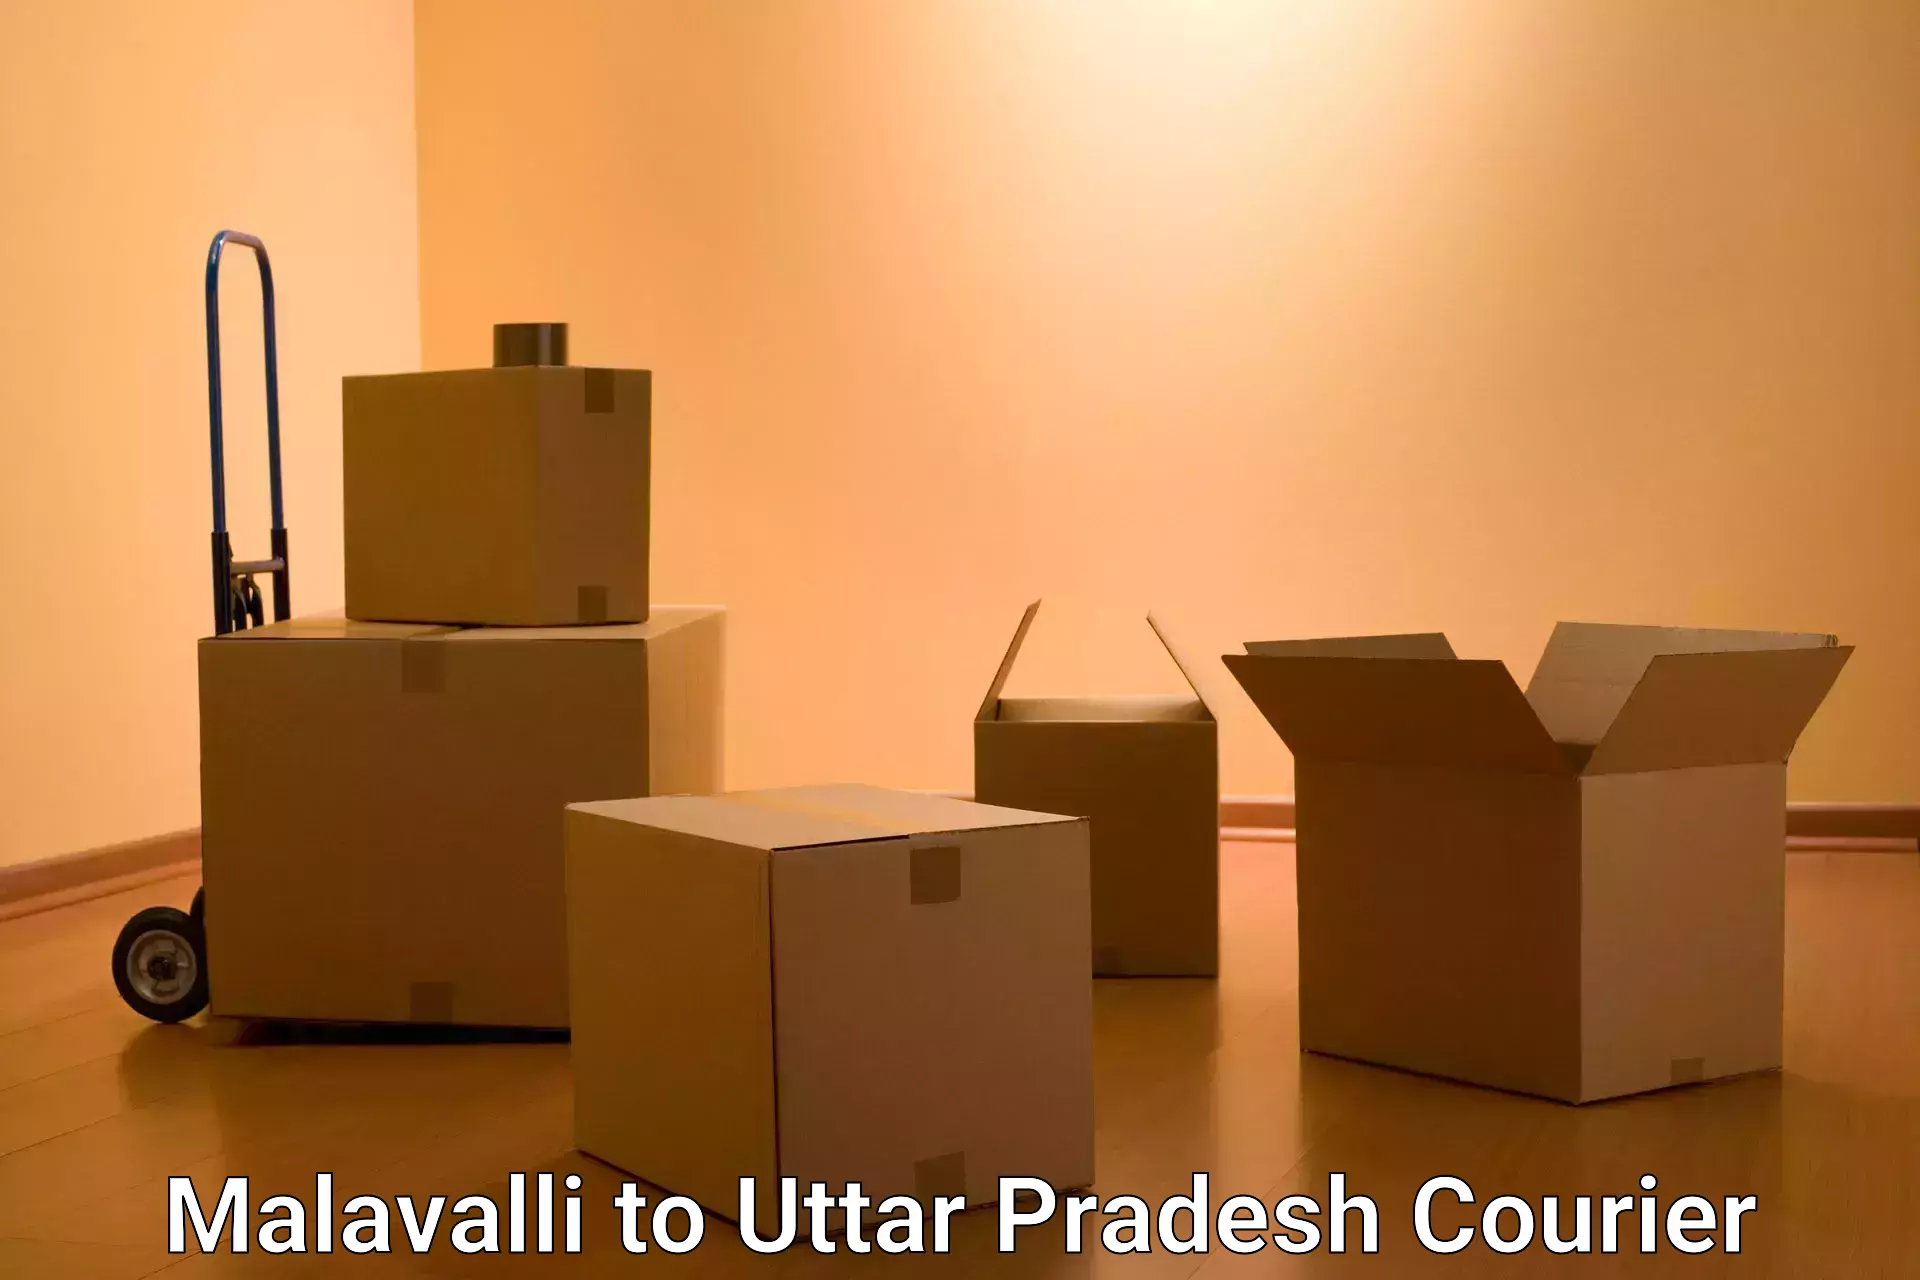 Cash on delivery service Malavalli to Varanasi